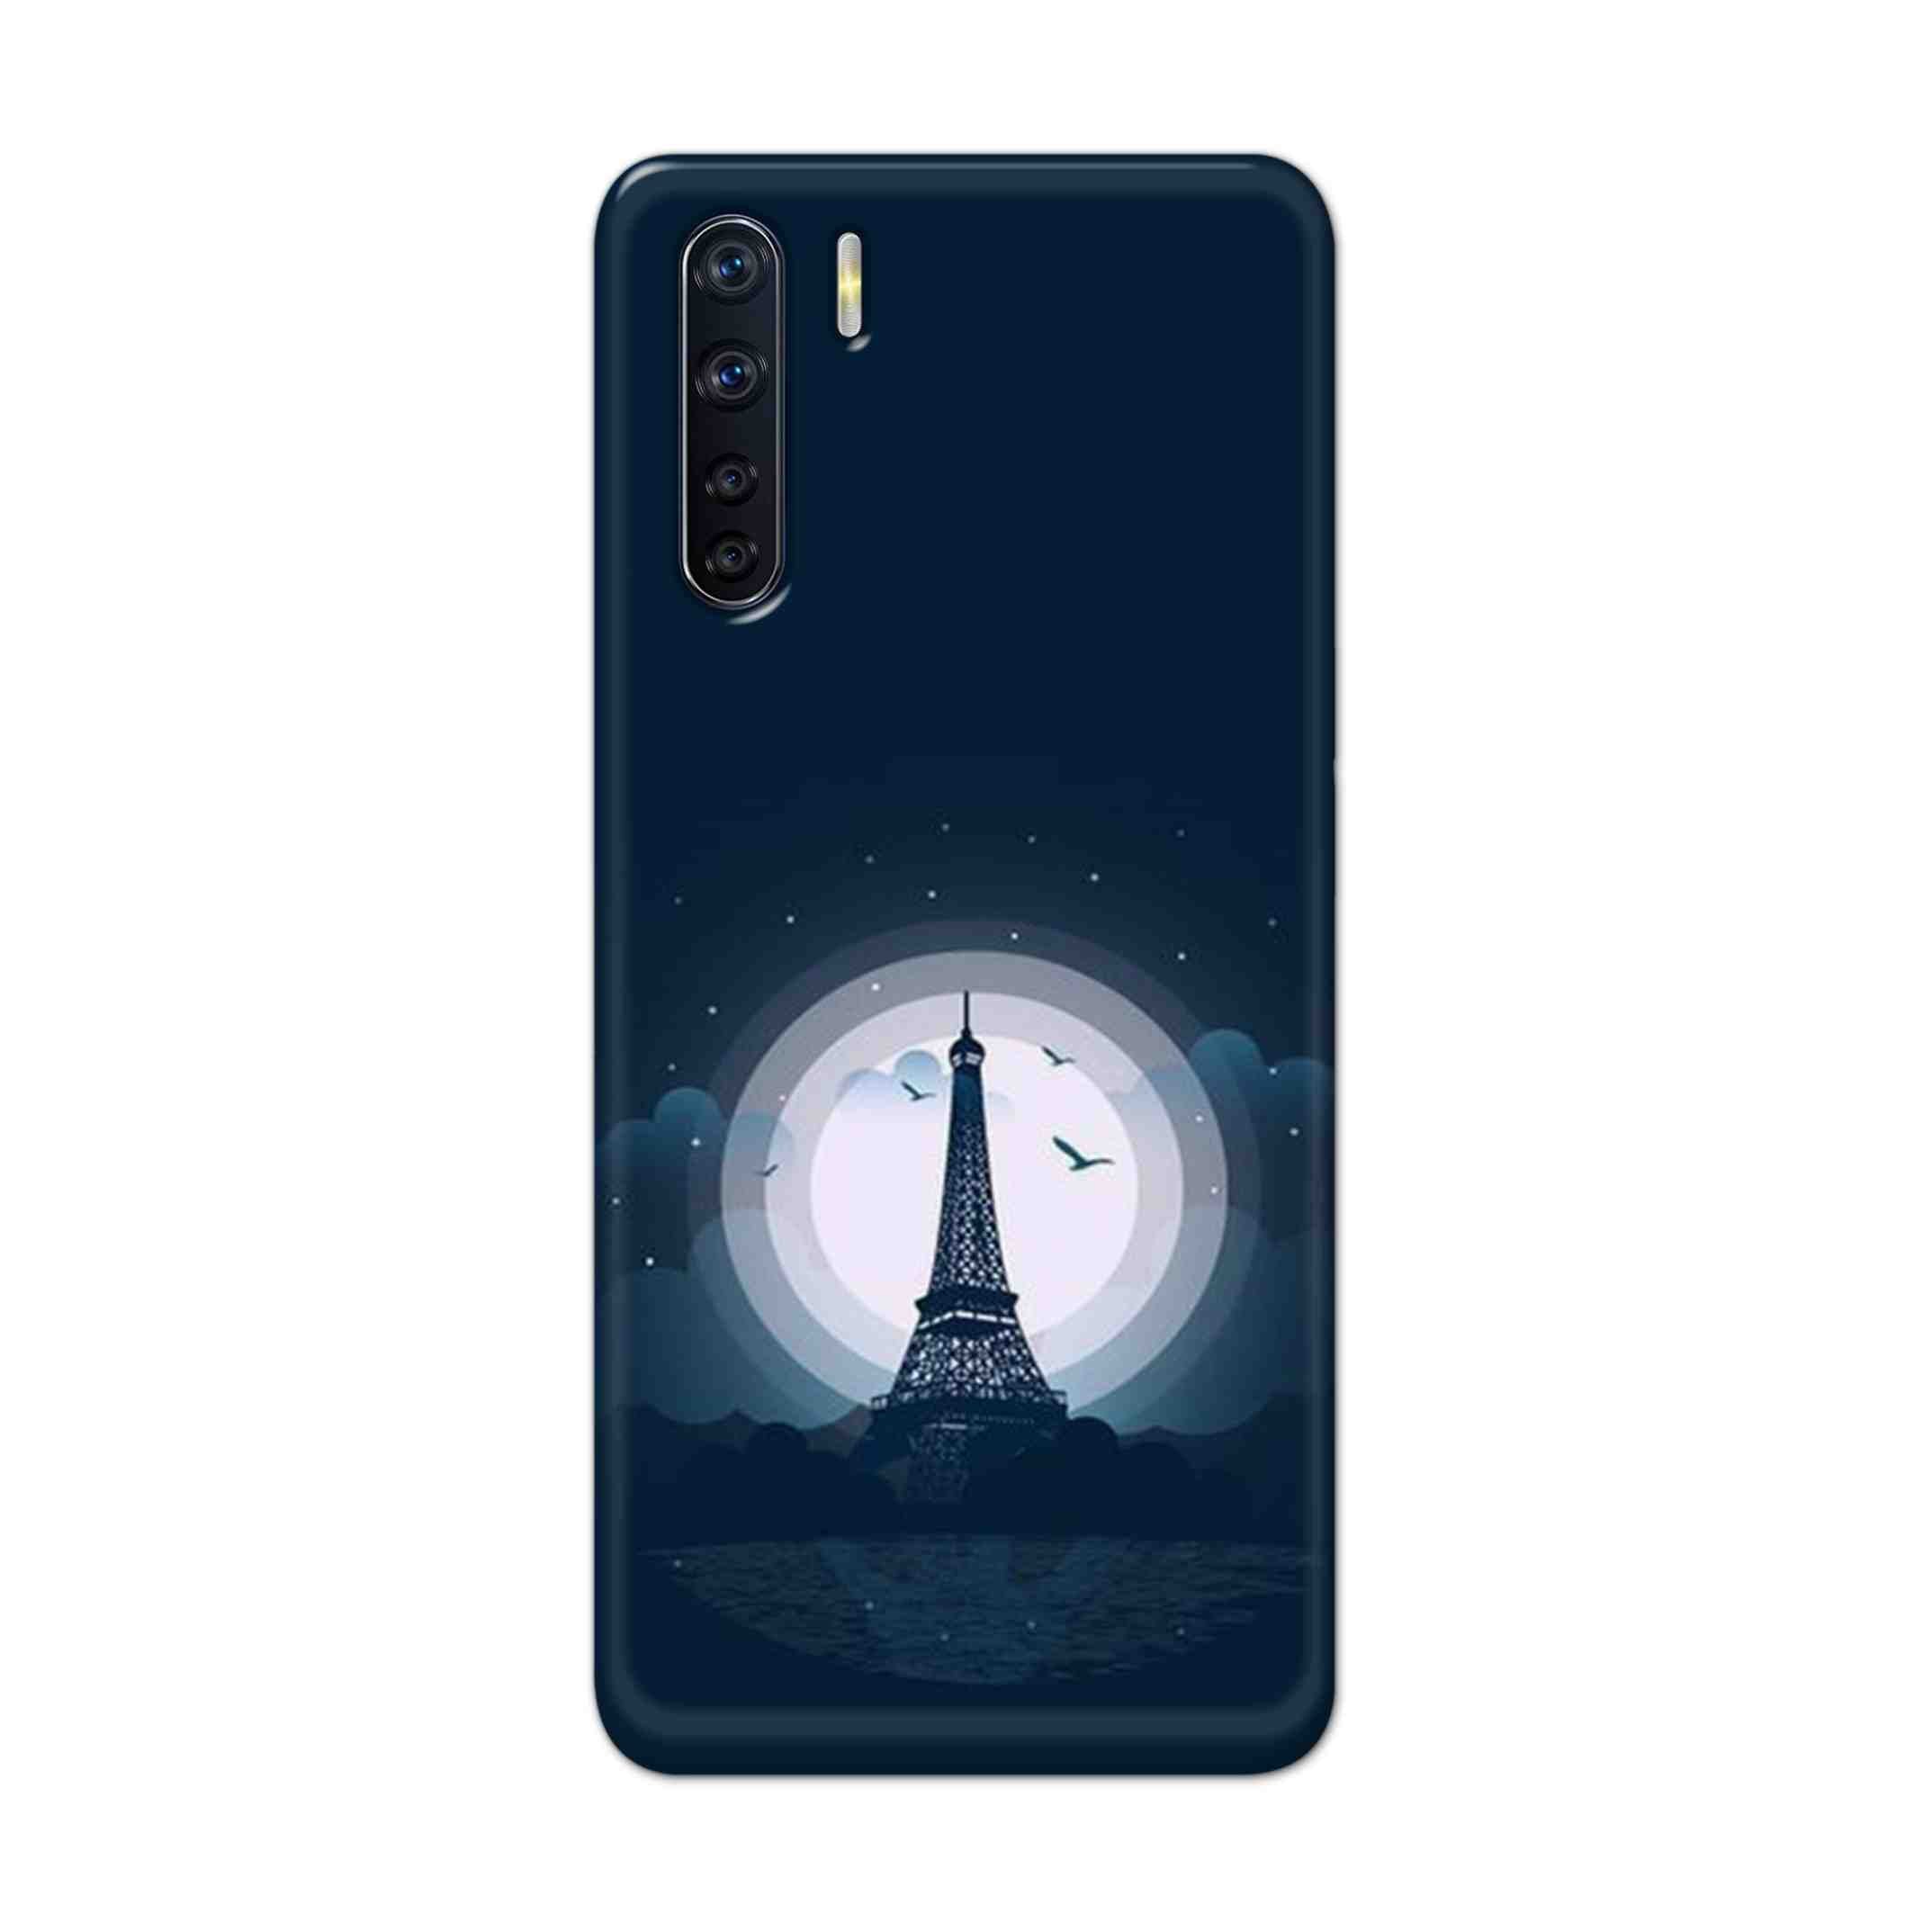 Buy Paris Eiffel Tower Hard Back Mobile Phone Case Cover For OPPO F15 Online